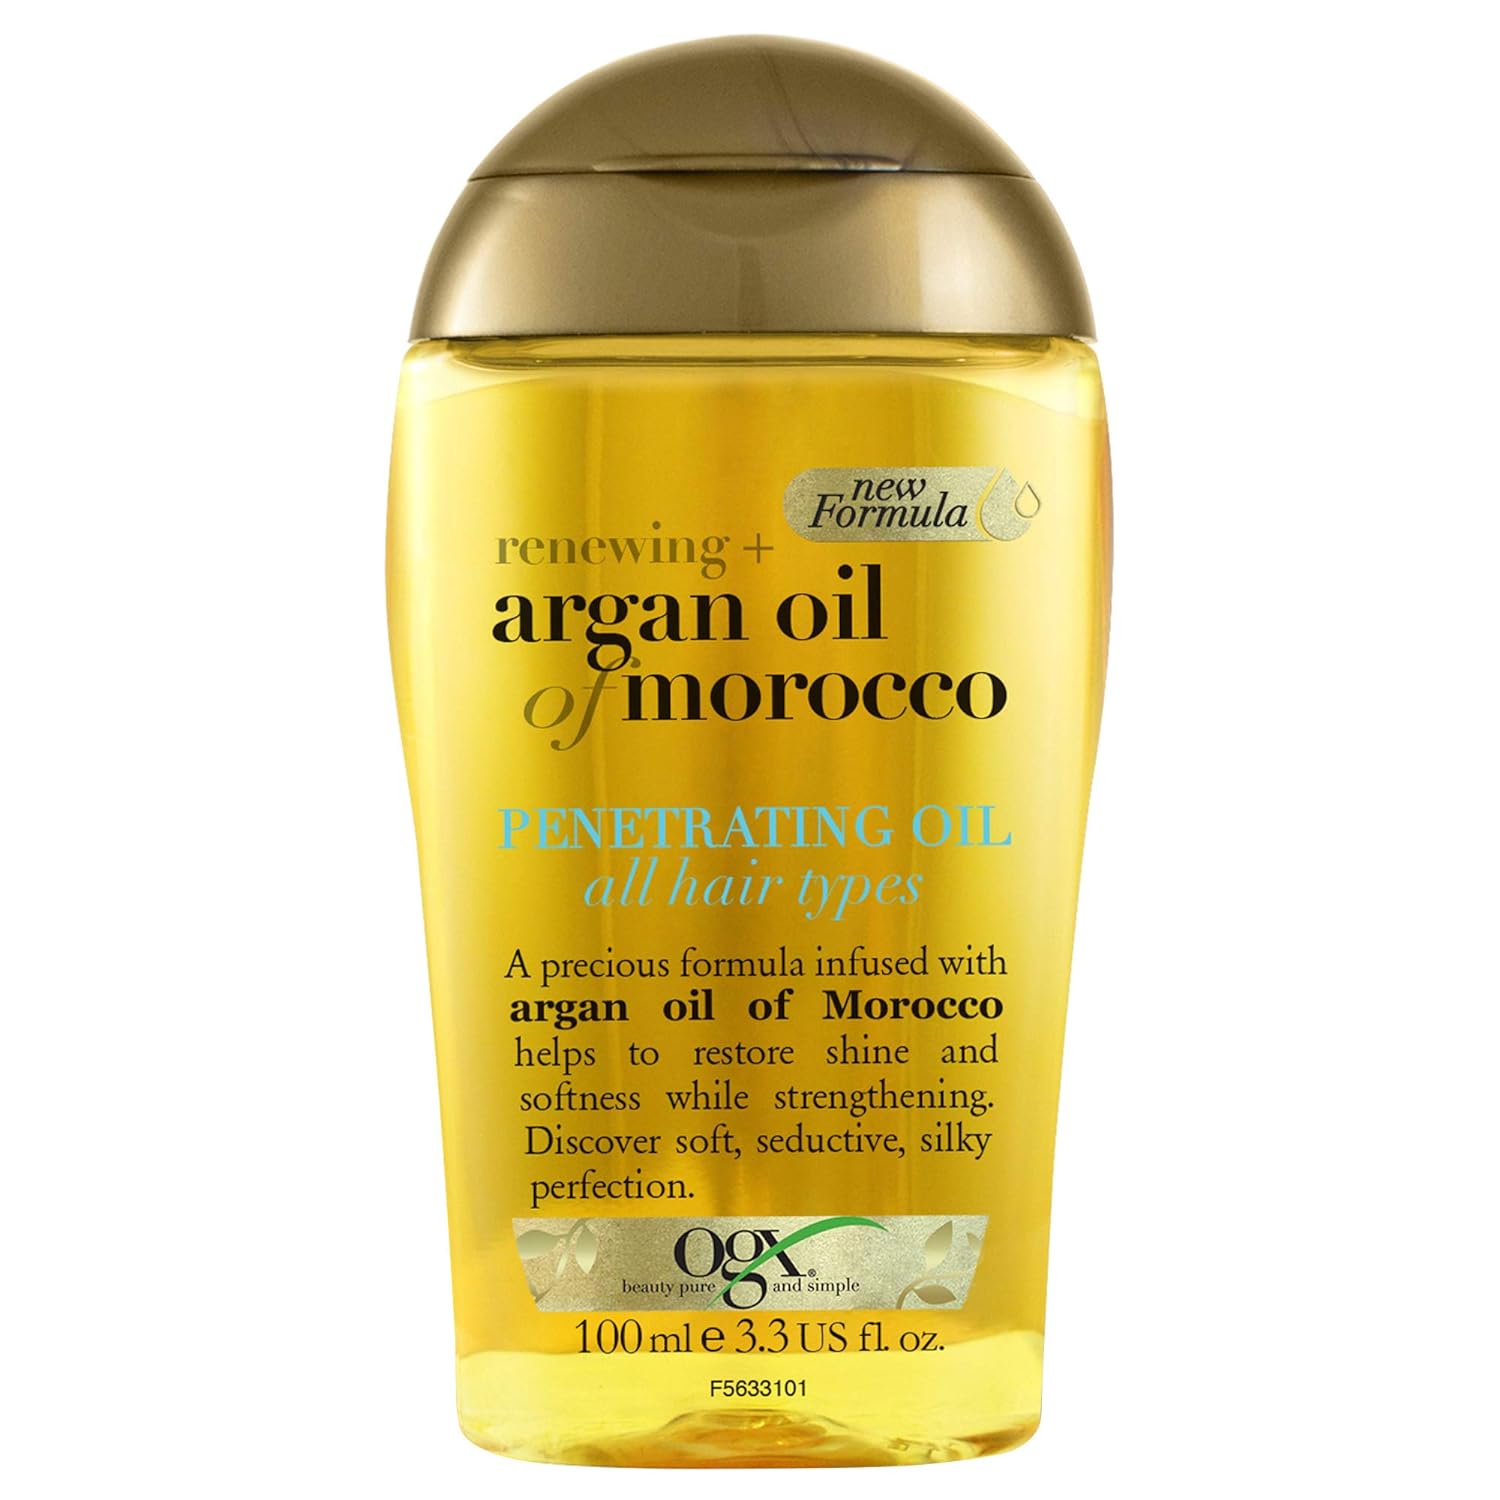 OGX Argan Oil of Morocco Renewing Penetrating Oil - 3.3oz/6pk